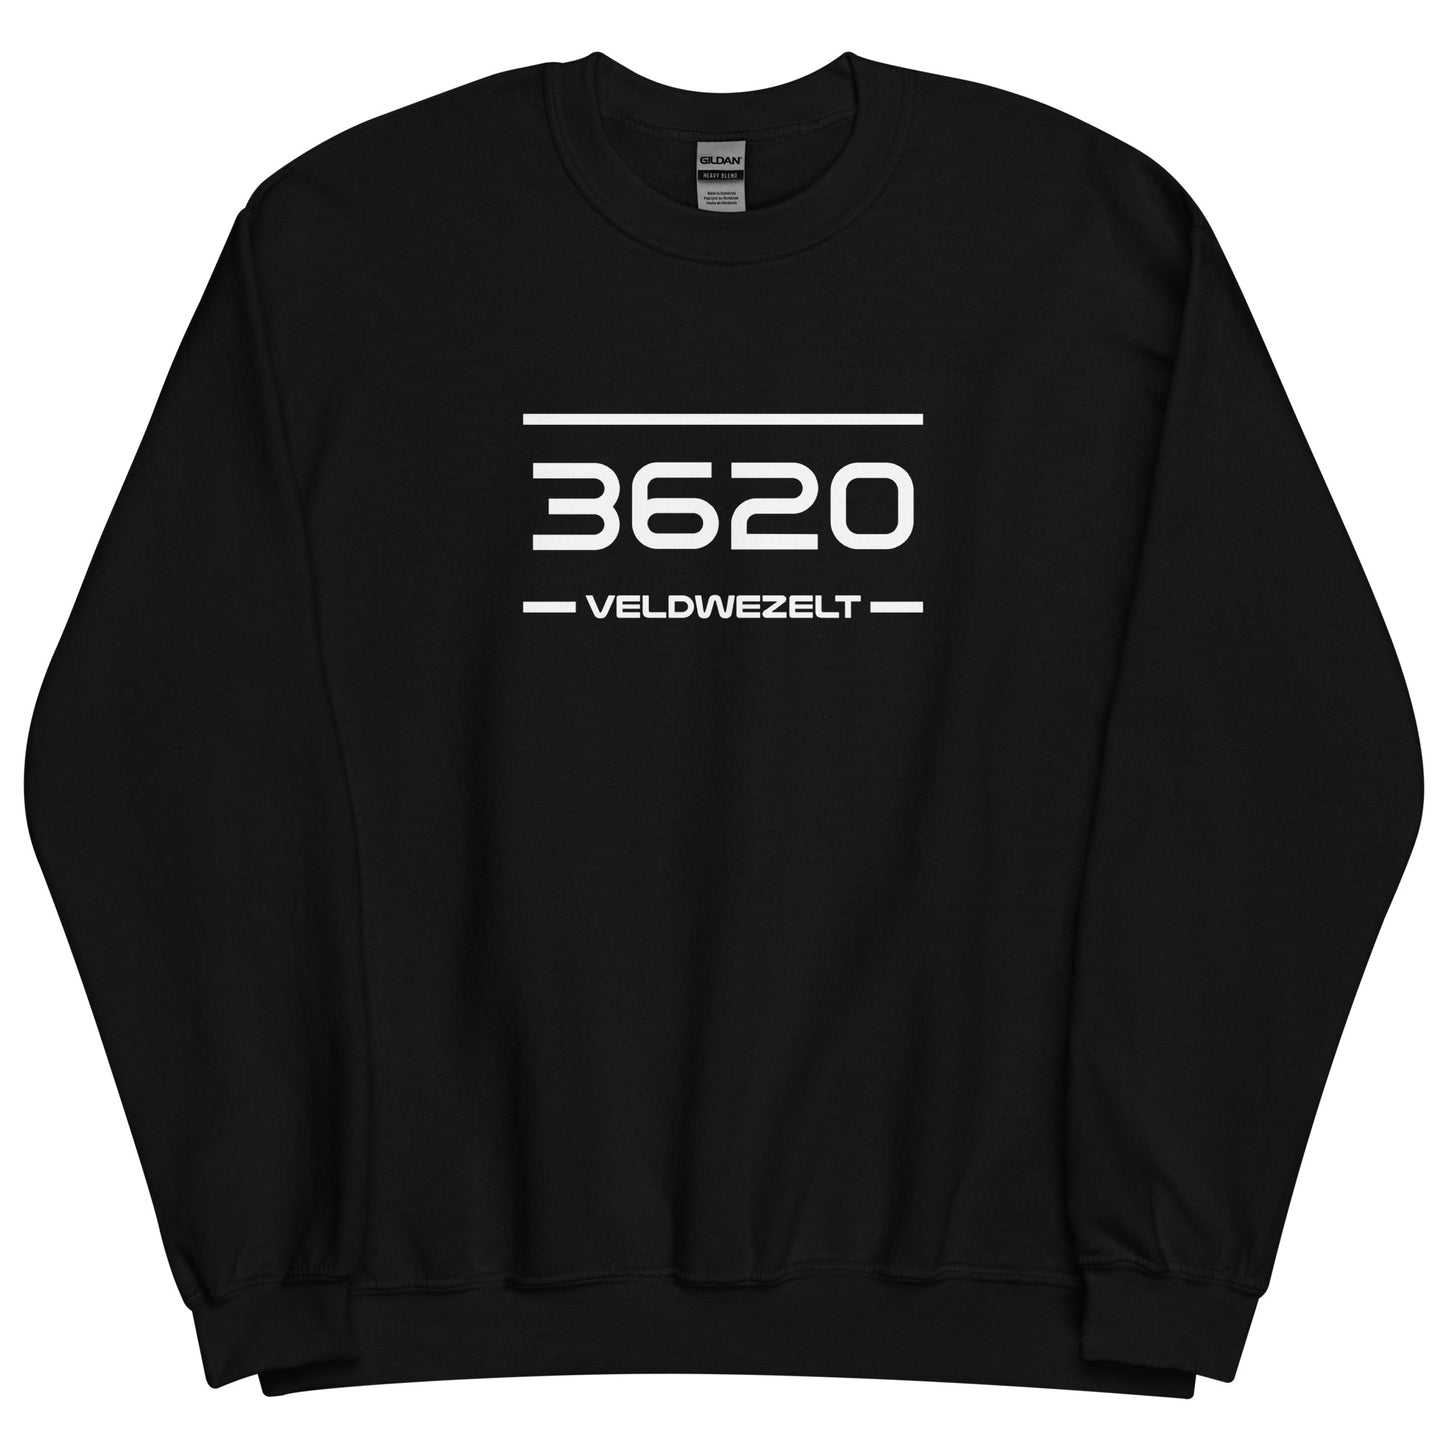 Sweater - 3620 - Veldwezelt (M/V)